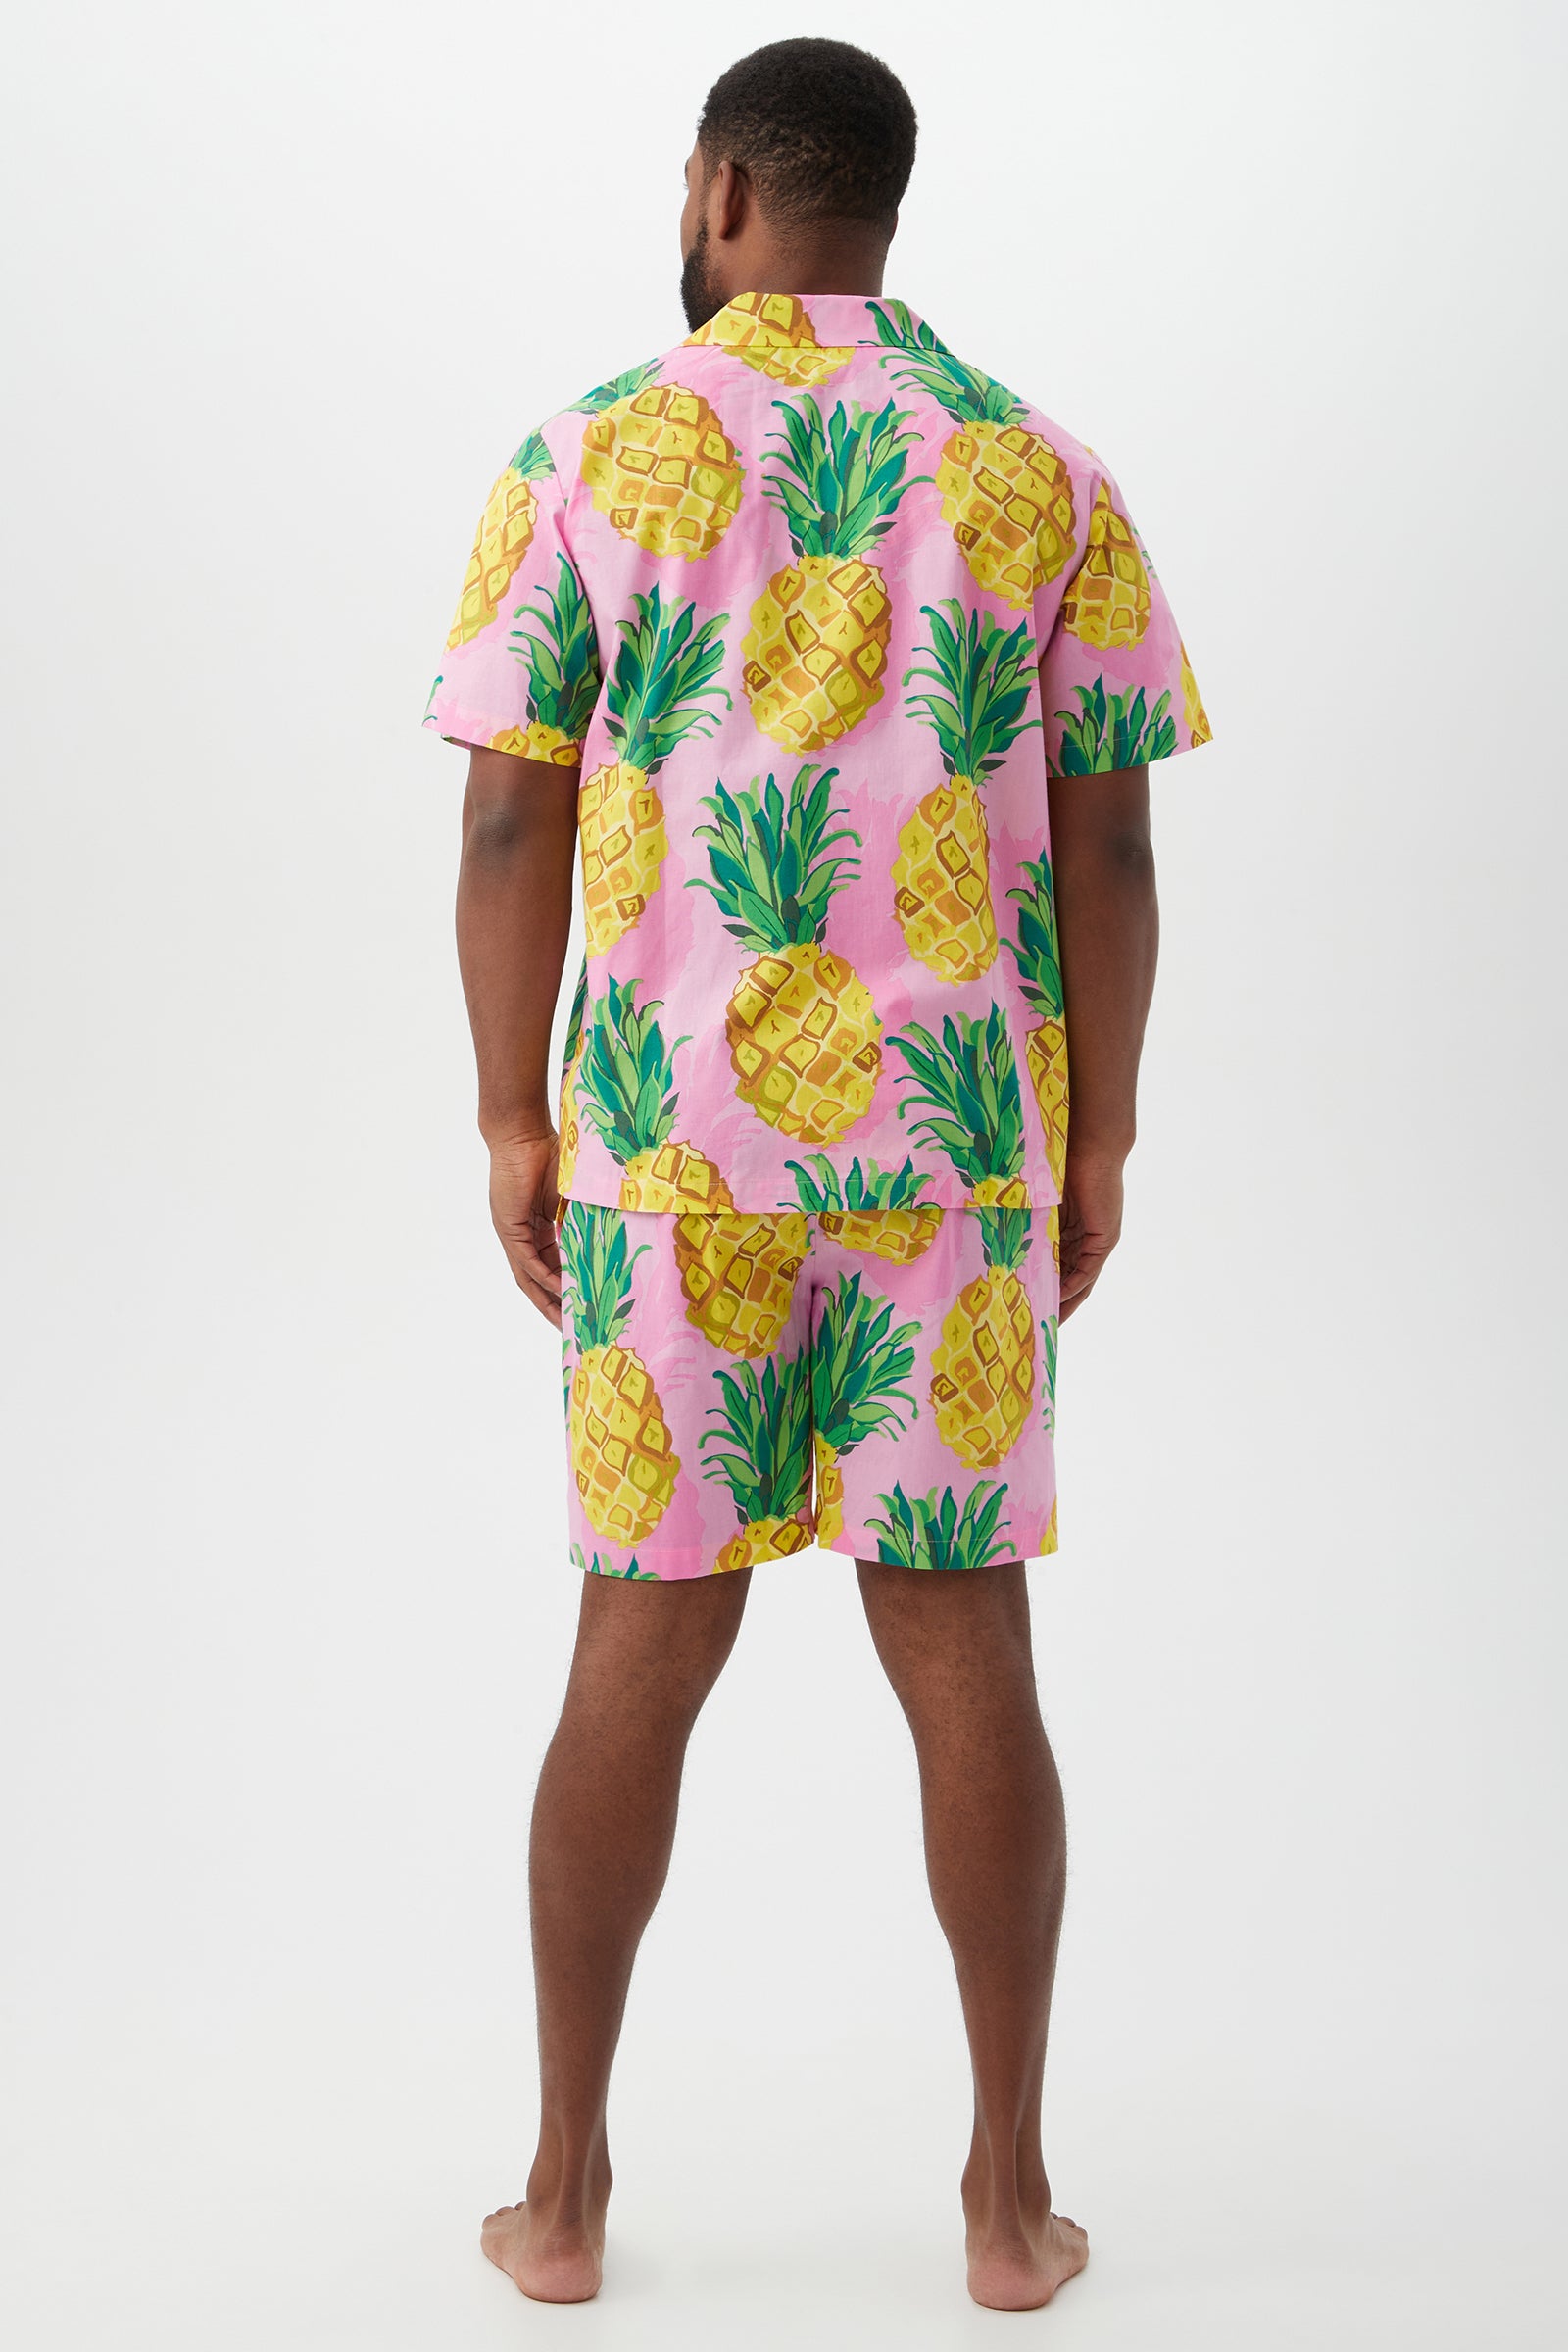 Cora Spearman Hawaii MENS short sleeve pajama pants 2 piece set